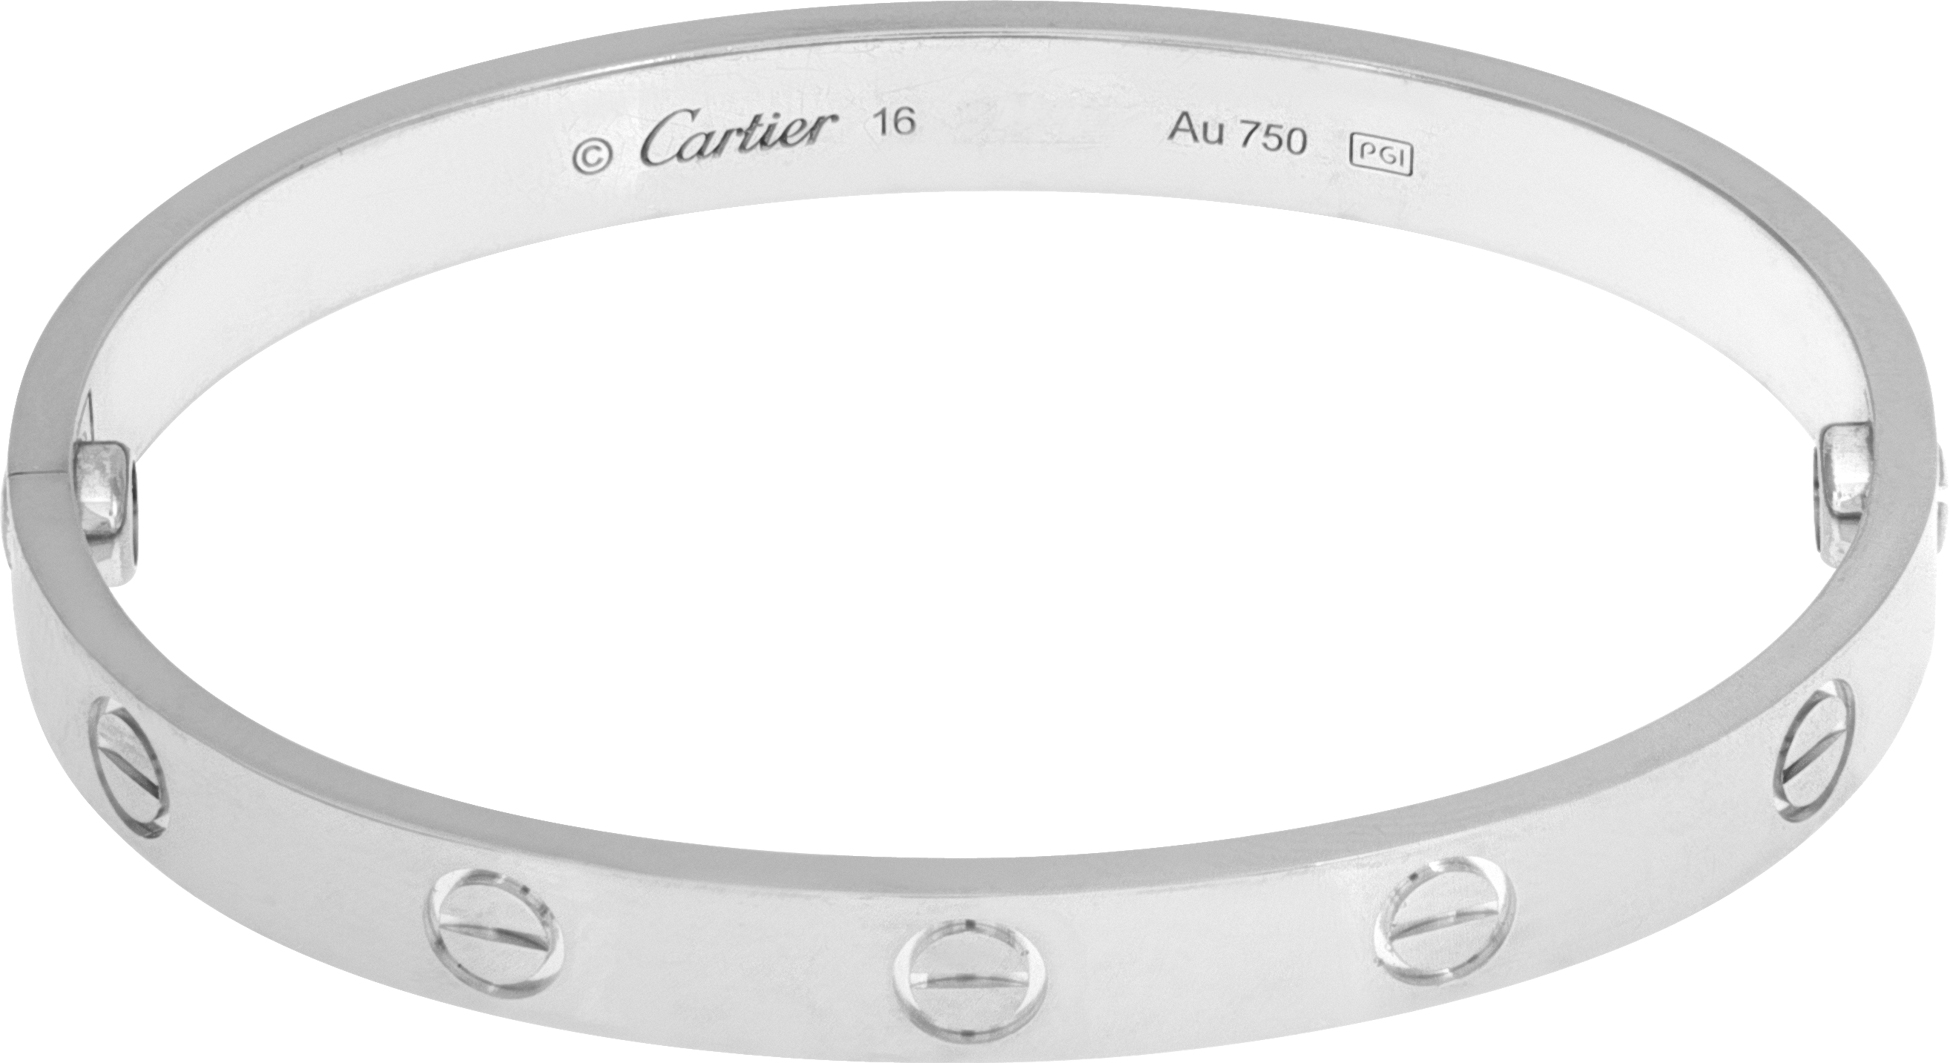 Cartier Love bracelet in 18k white gold size 16